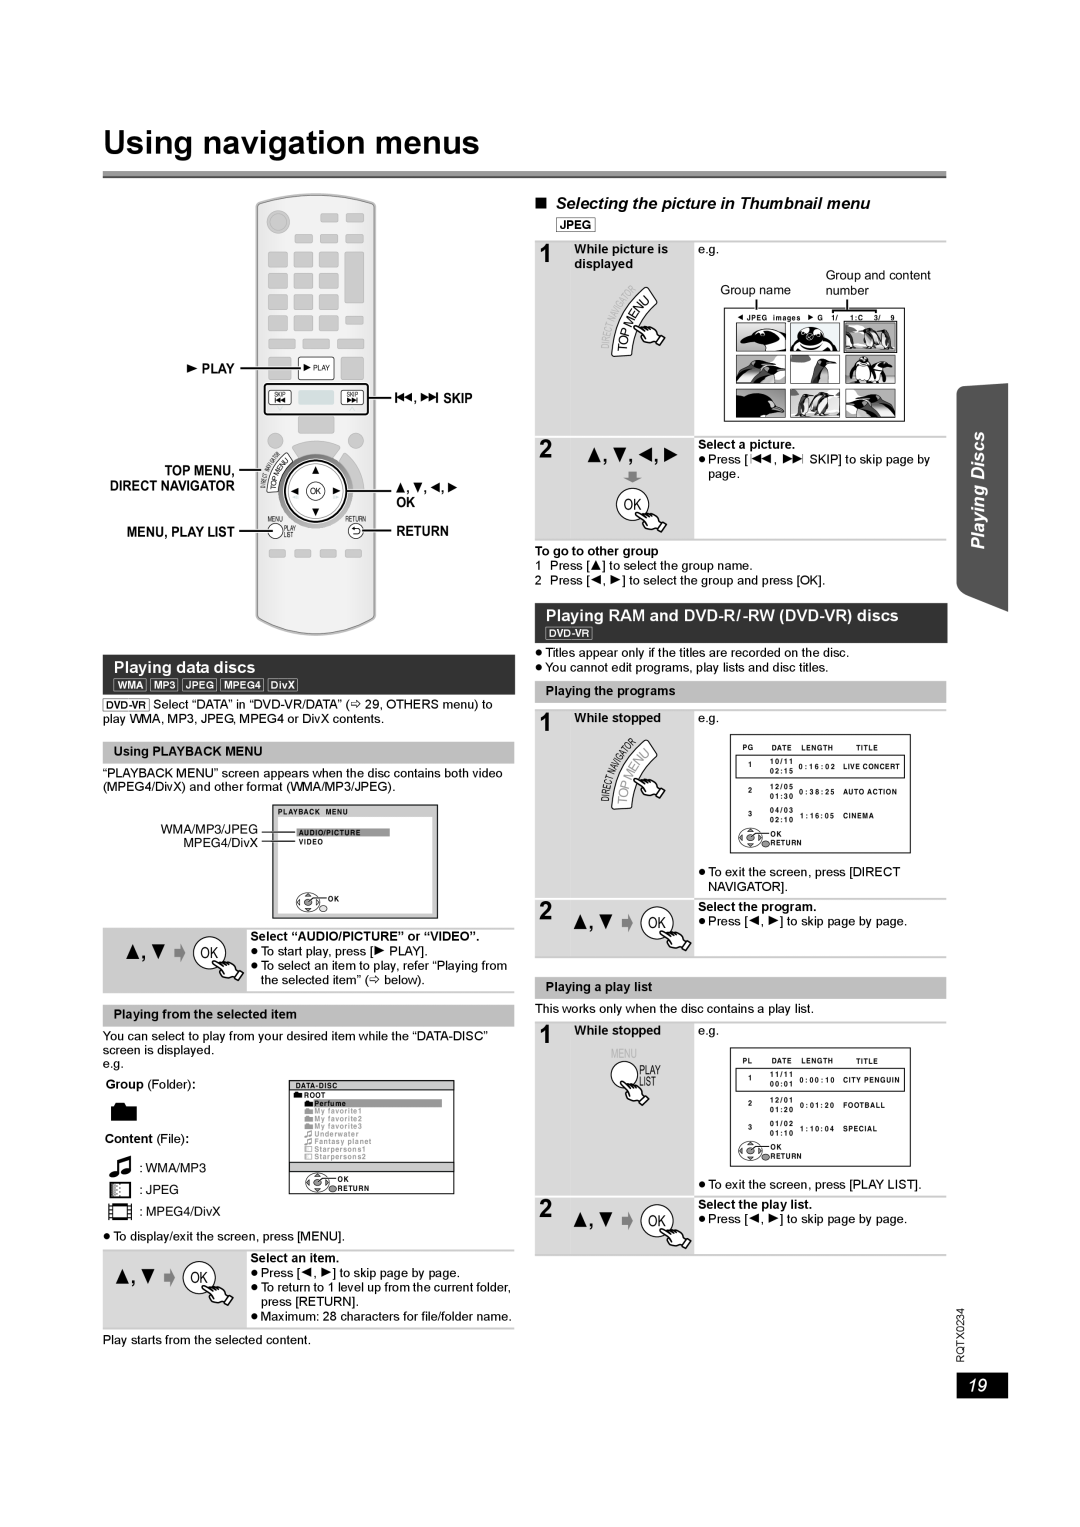 Panasonic SC-PT875 Using navigation menus, Selecting the picture in Thumbnail menu, Playing data discs, Reference, Skip 